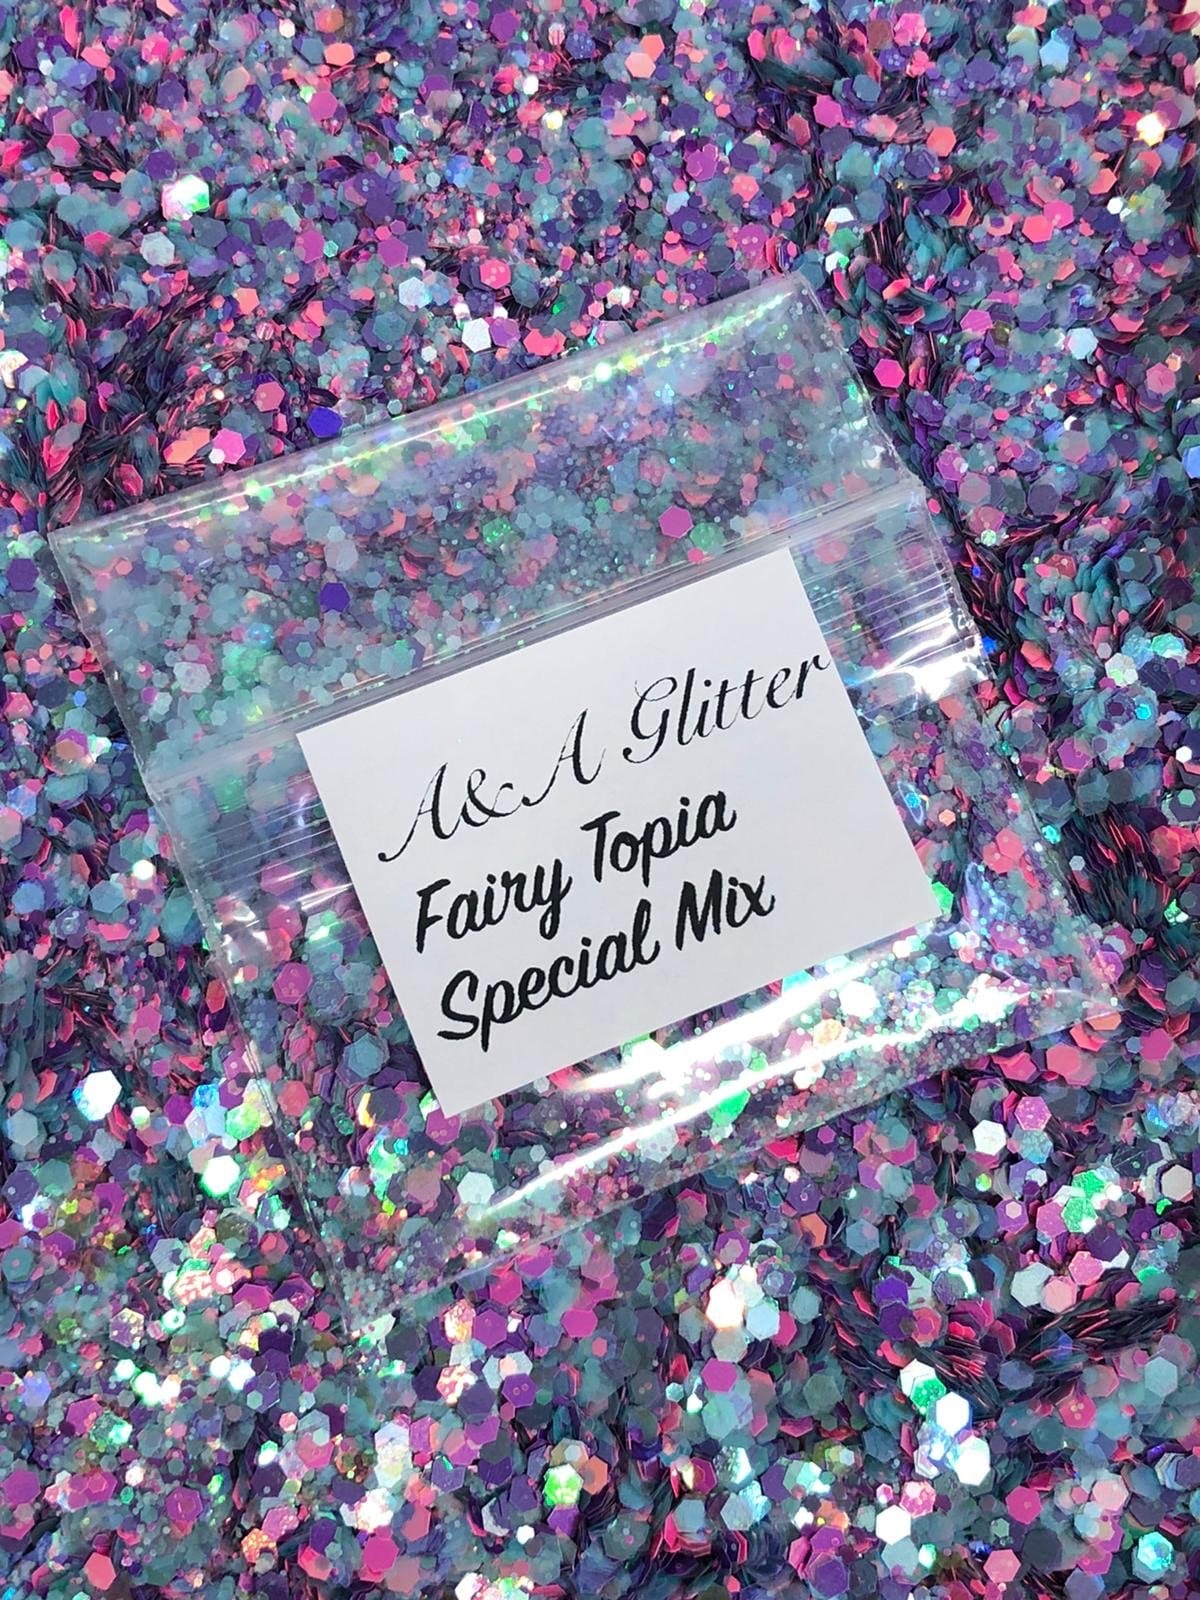 Fairy Topia - Special Mix